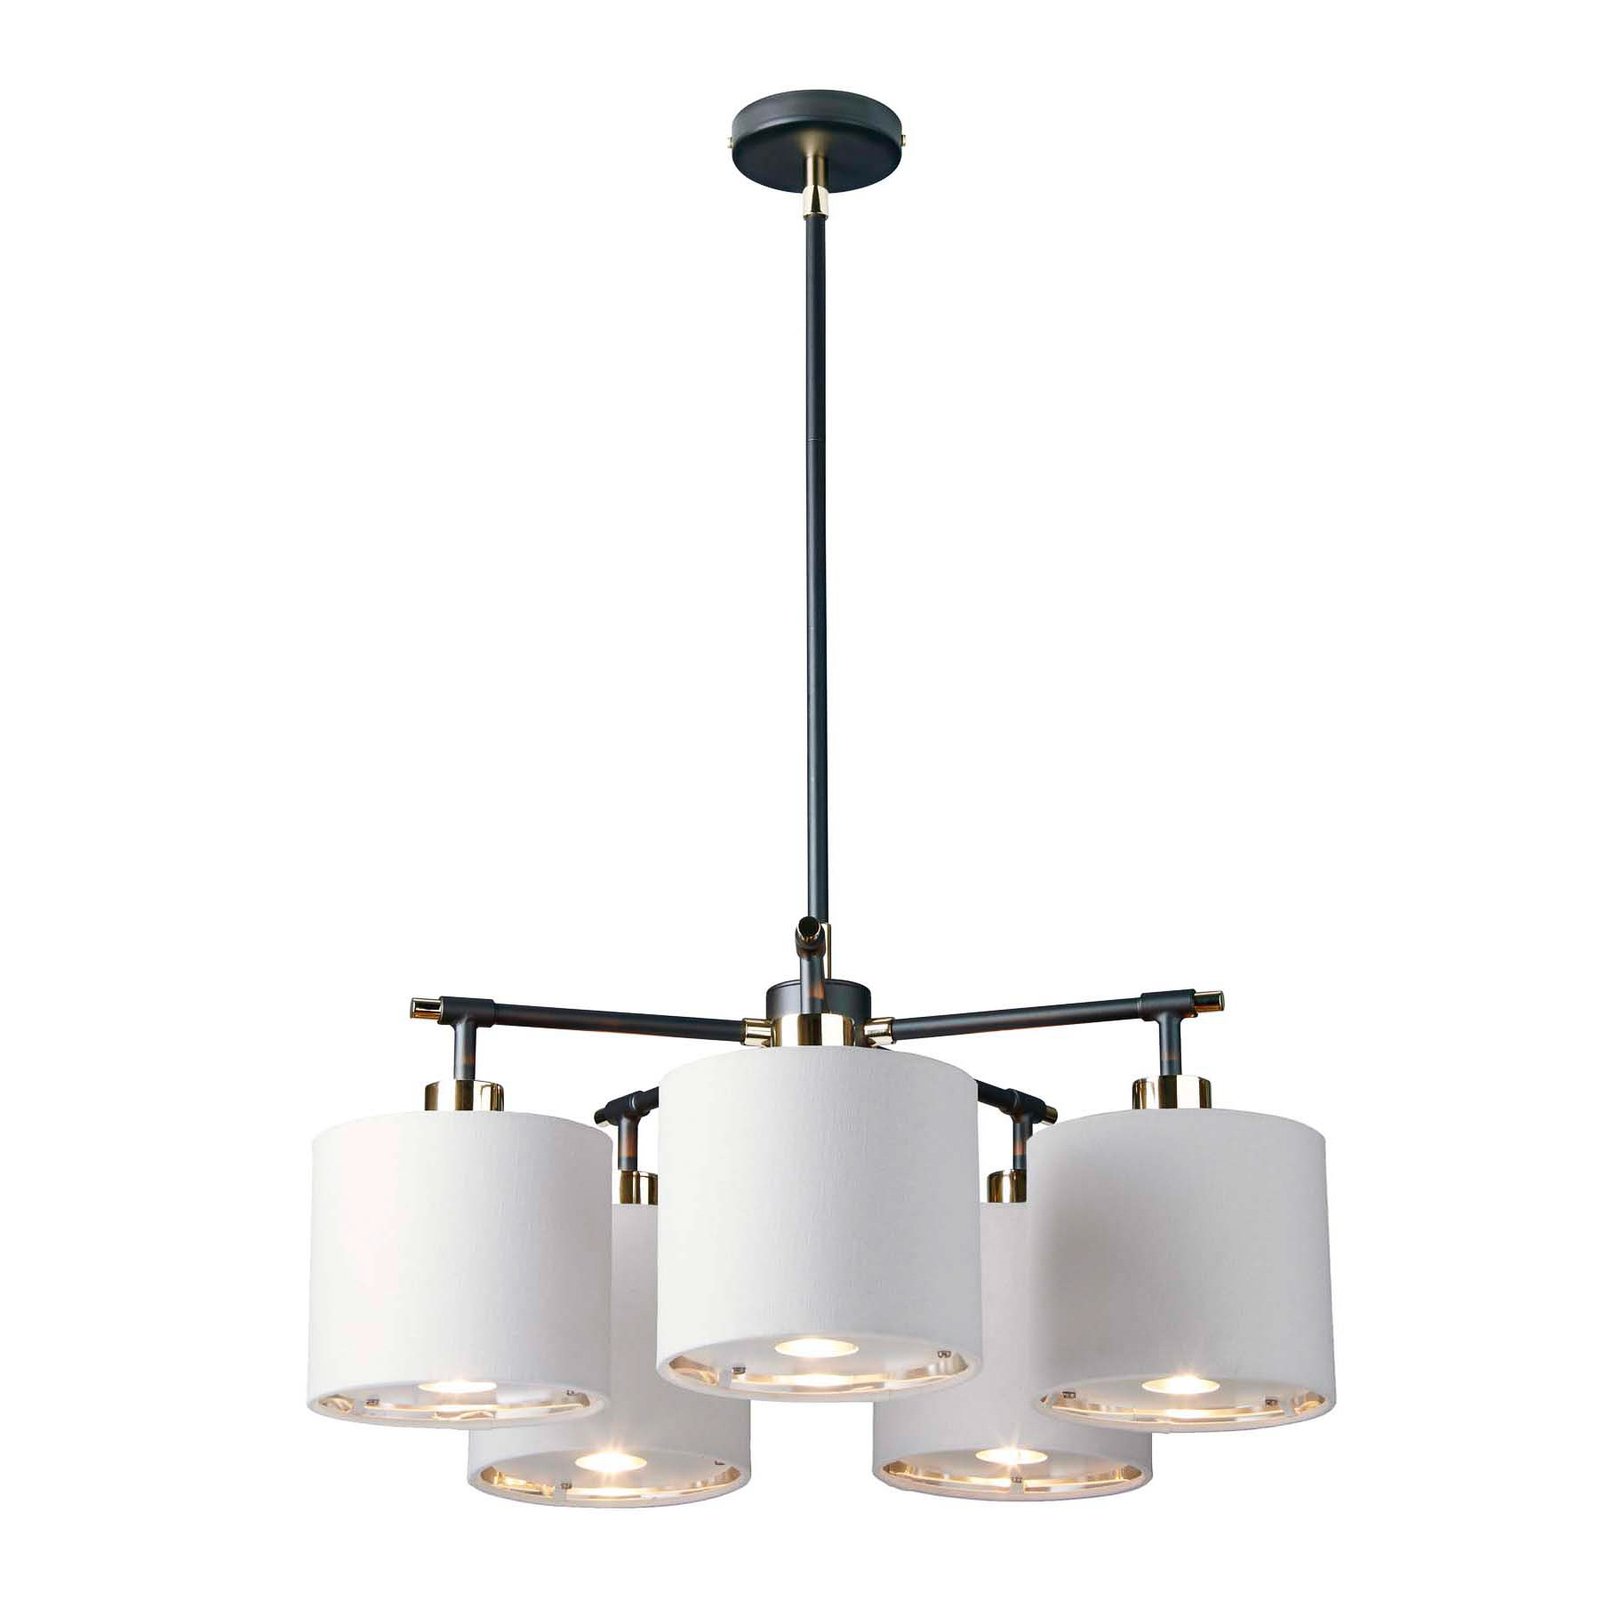 Balance pendant light 5-bulb, black/nickel, white lampshades